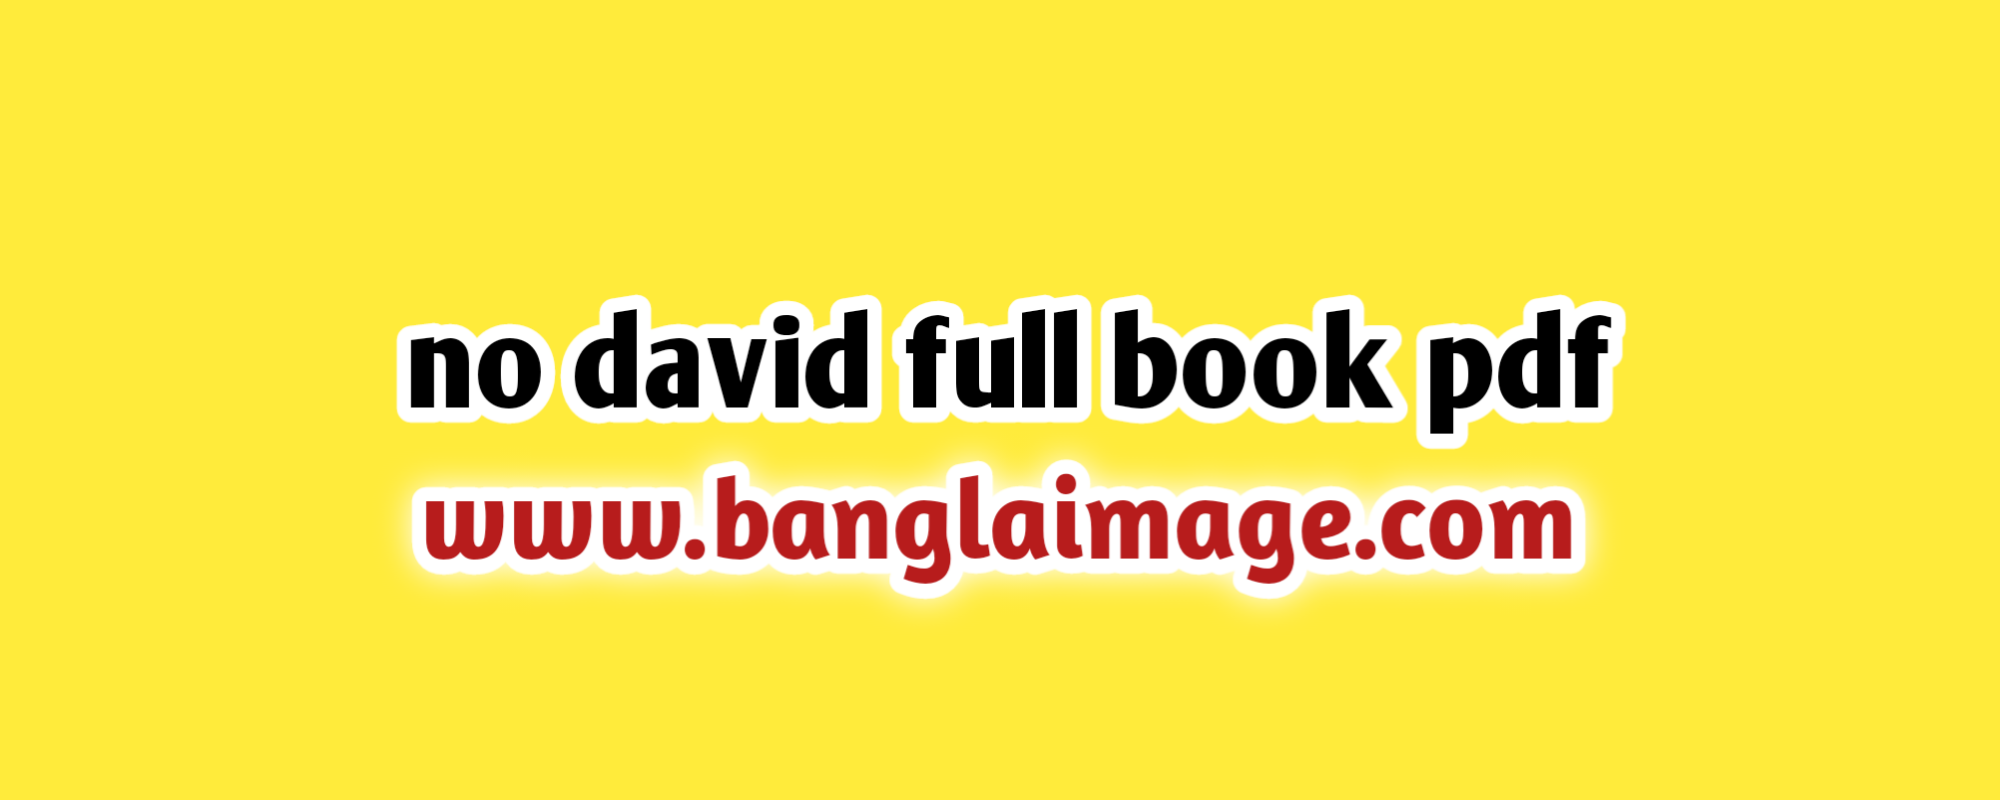 no david full book pdf, david goes to school full book, david goes to school free pdf , the david goes to school full book